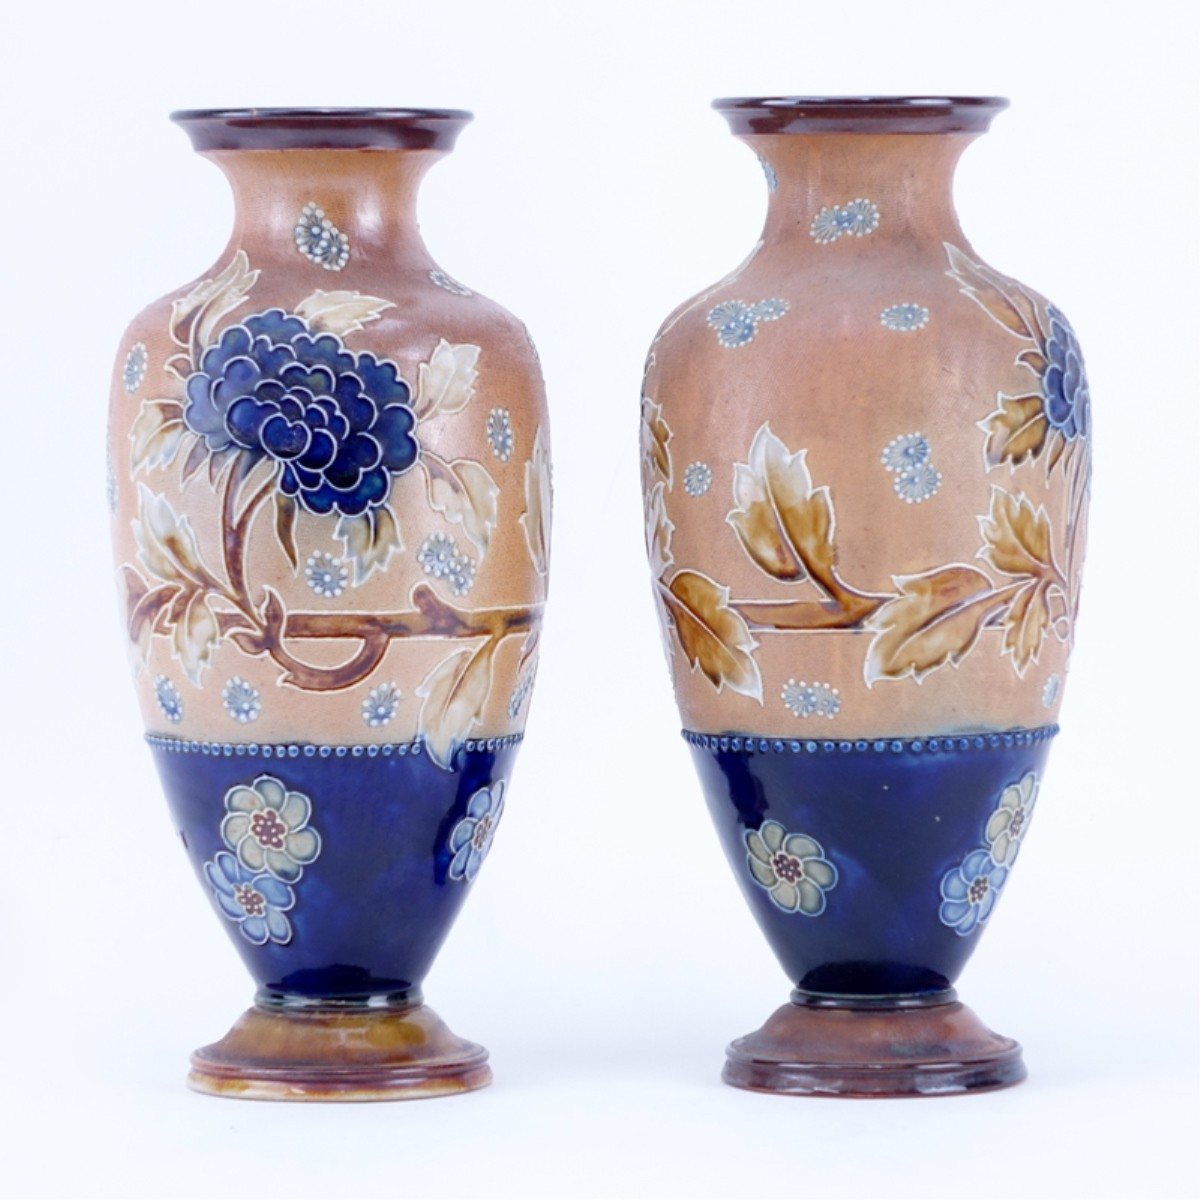 Pr Royal Doulton Slaters Pottery Vases